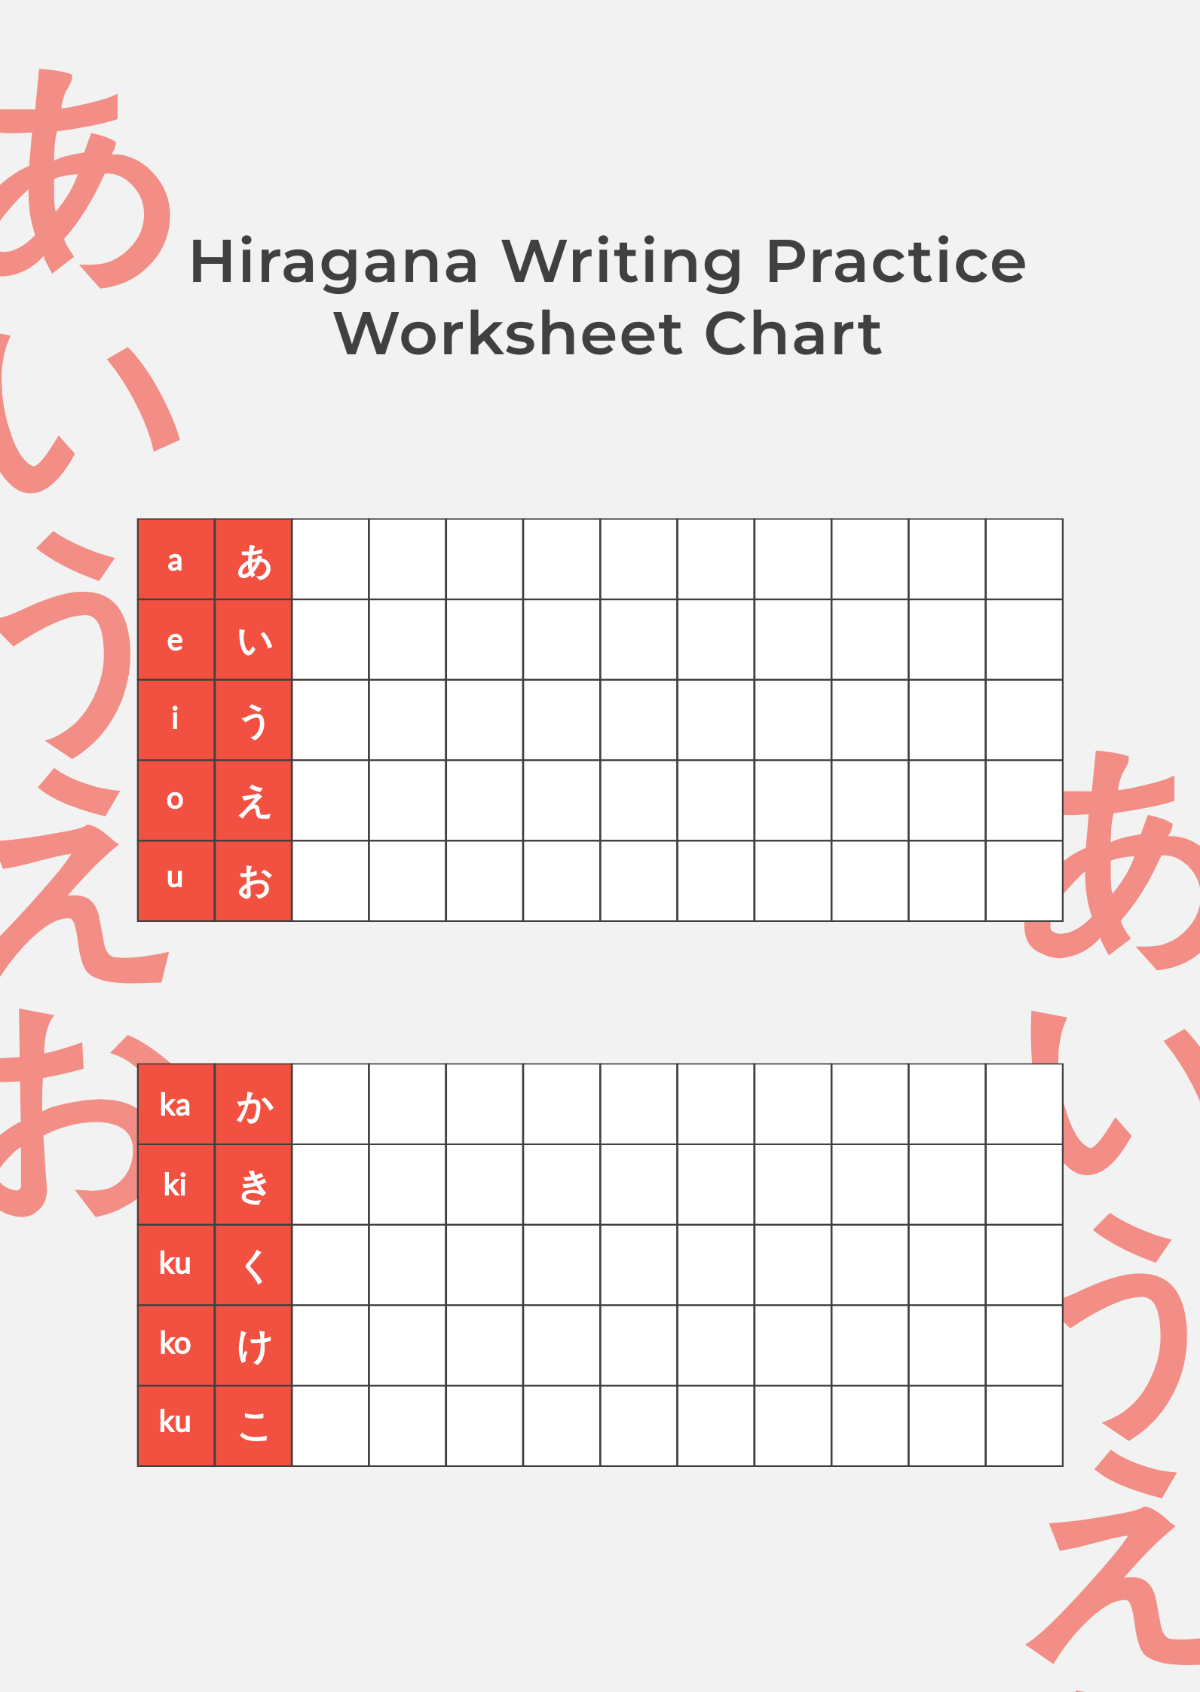 Free Hiragana Writing Practice Worksheet Chart Template